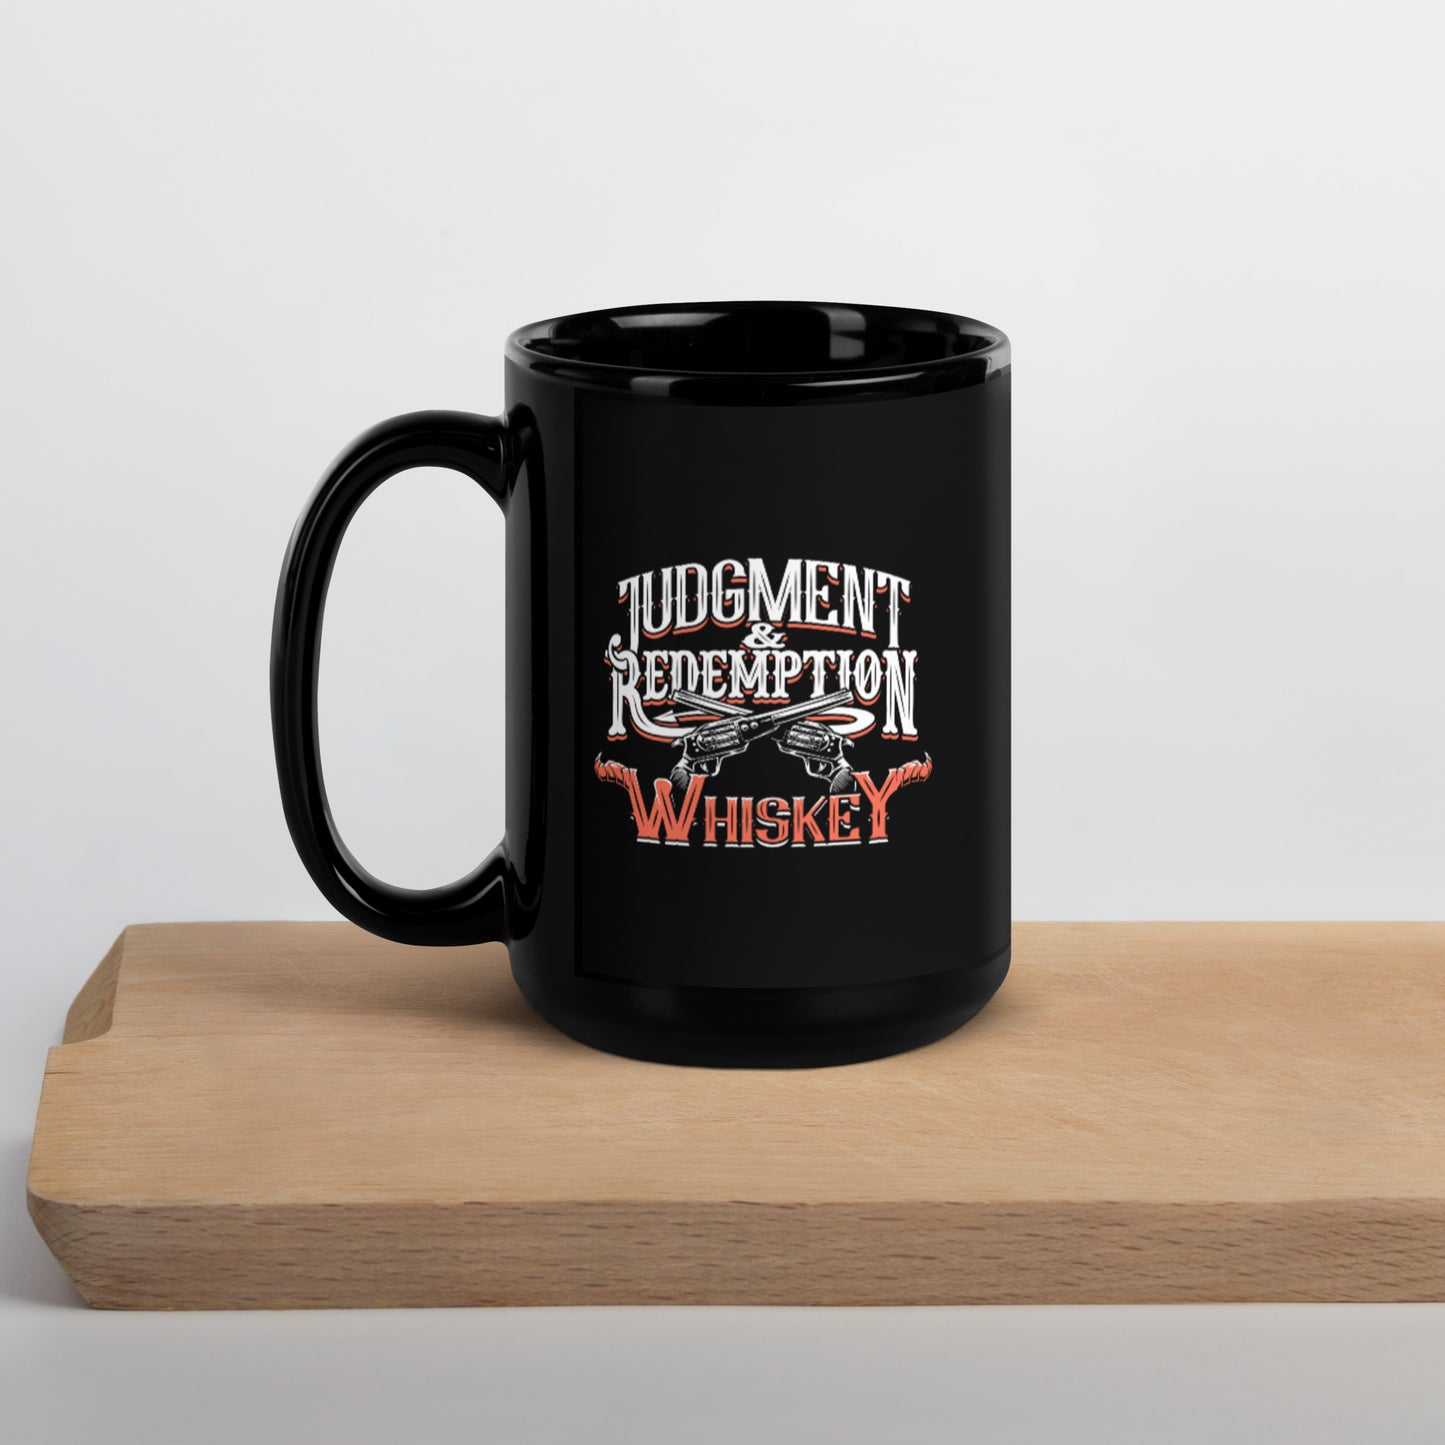 Judgment & Redemption Whiskey - Mug